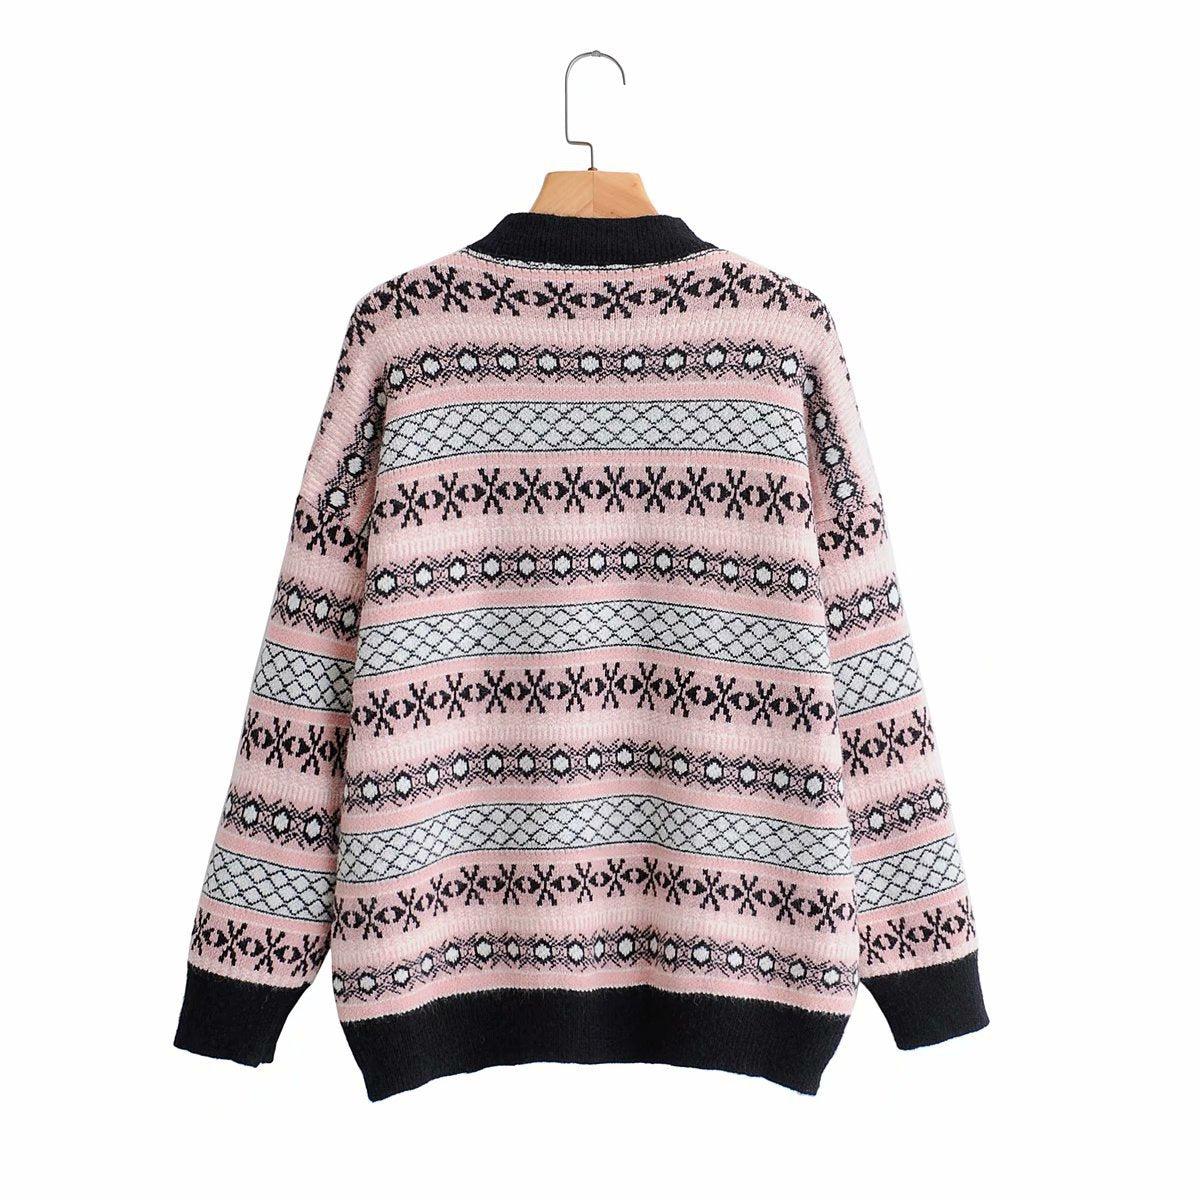 Slouchy turtleneck sweater for women  1359